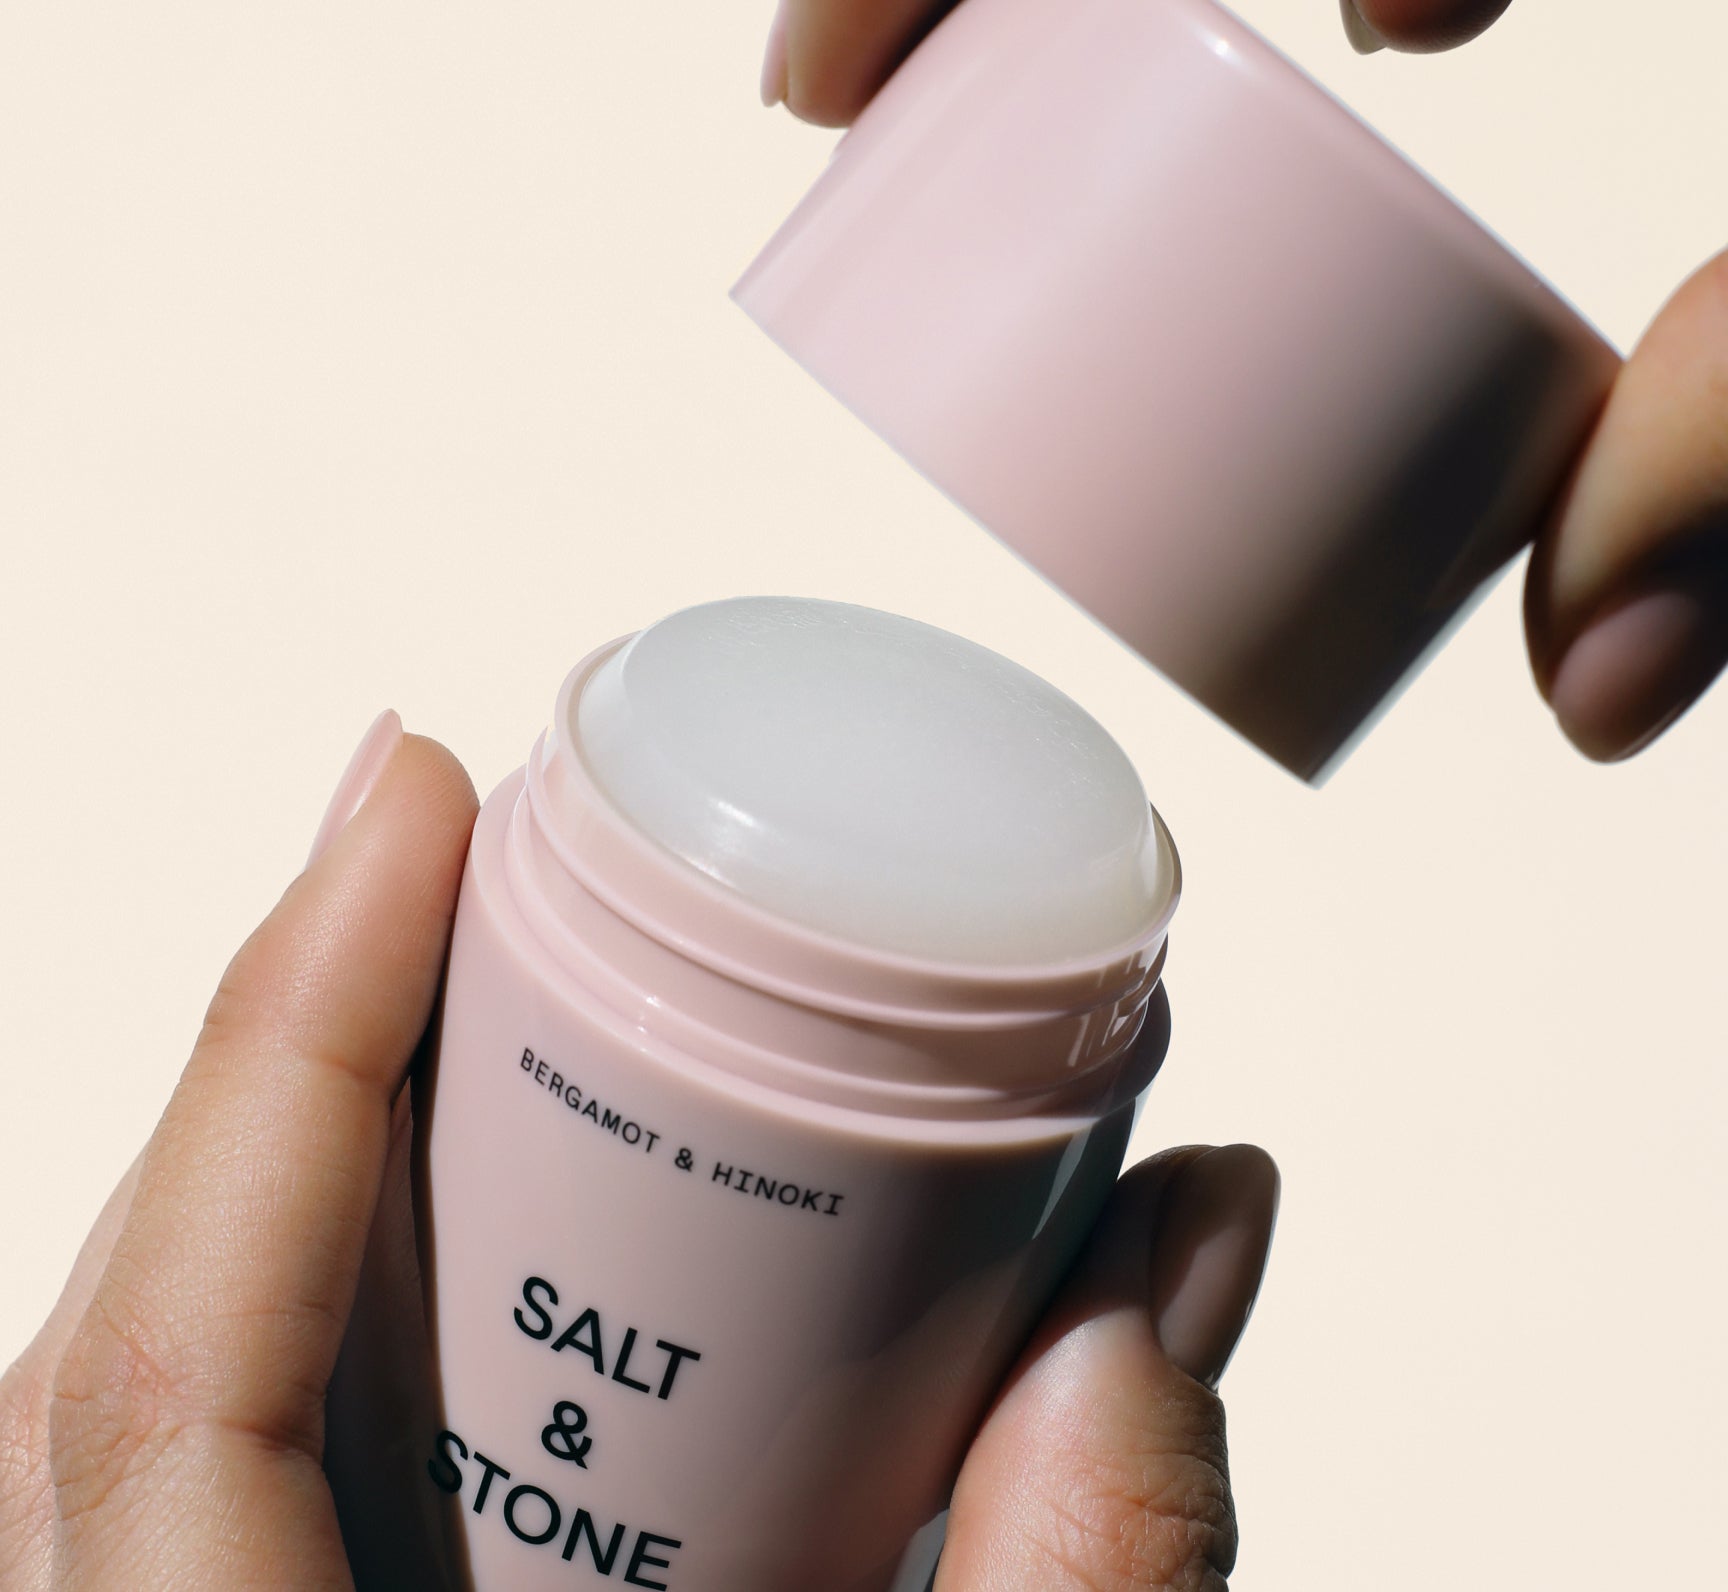 Sensitive skin gel deodorant – Bergamot &amp; Hinoki Salt & Stone Suisse